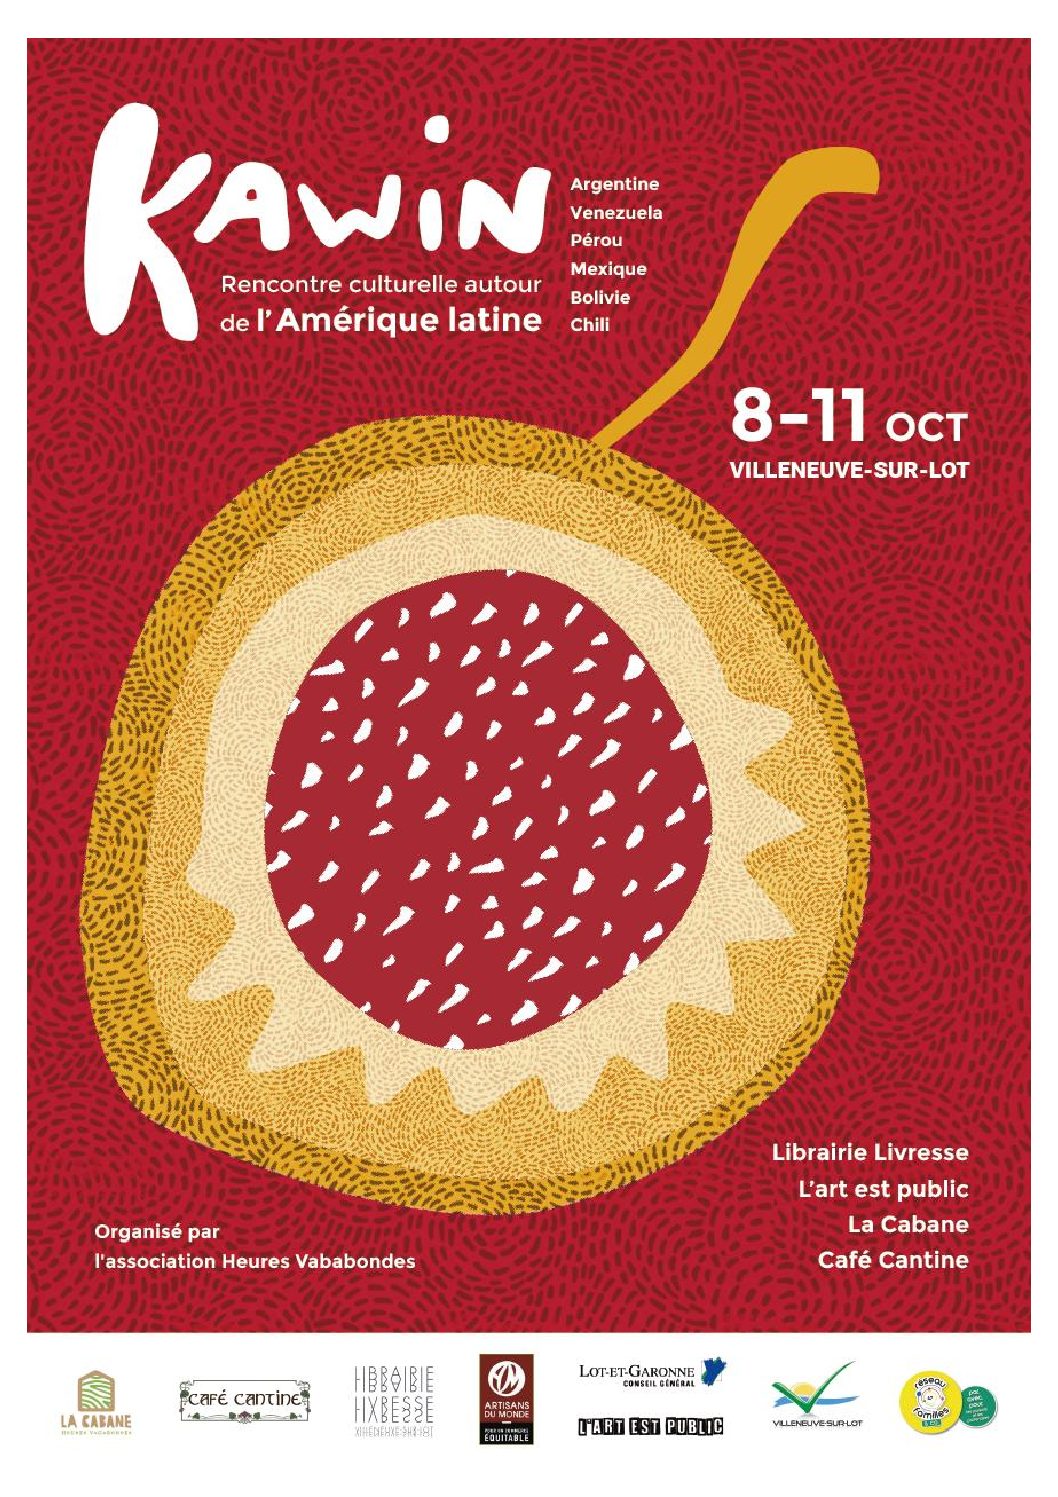 Petit rappel : Festival Kawin – Programme